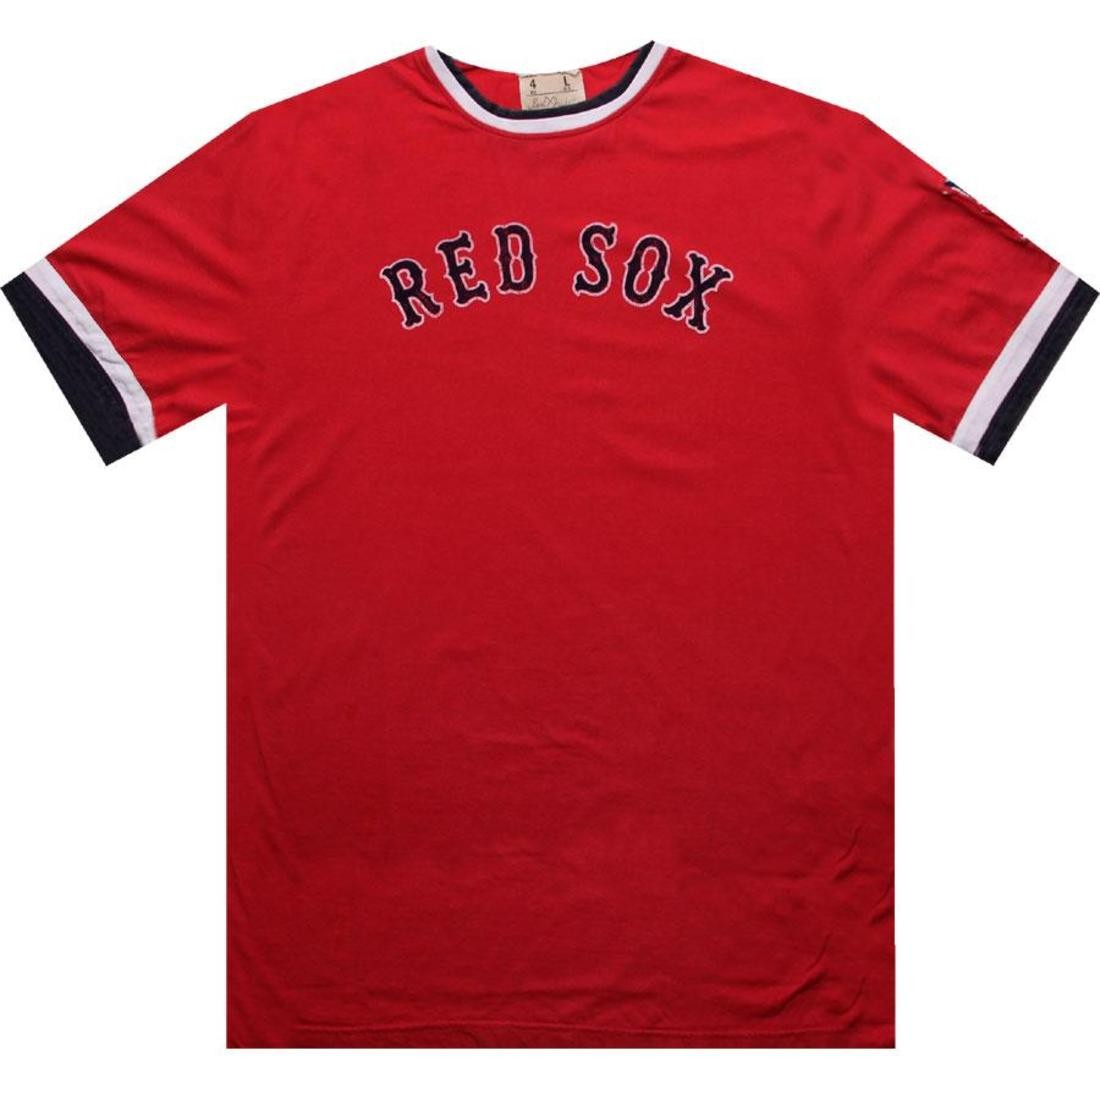 tee shirt red sox